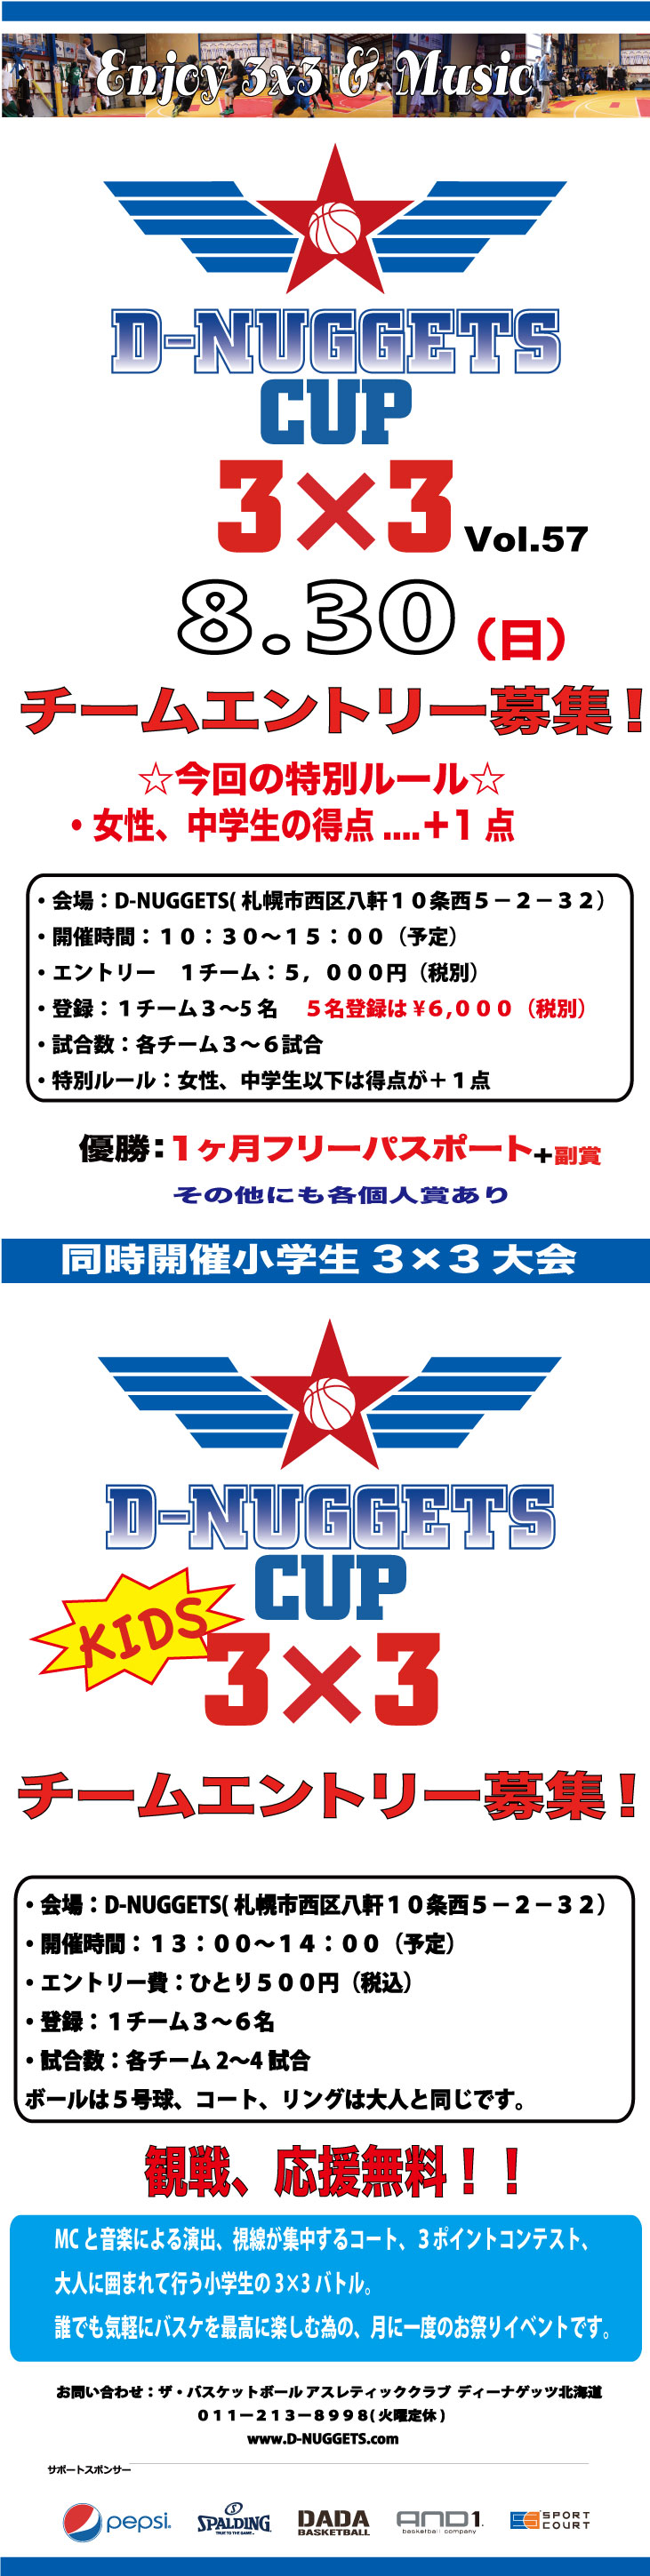 D-NUGGETS-CUP-HOKKAIDO-Vol.57.jpg